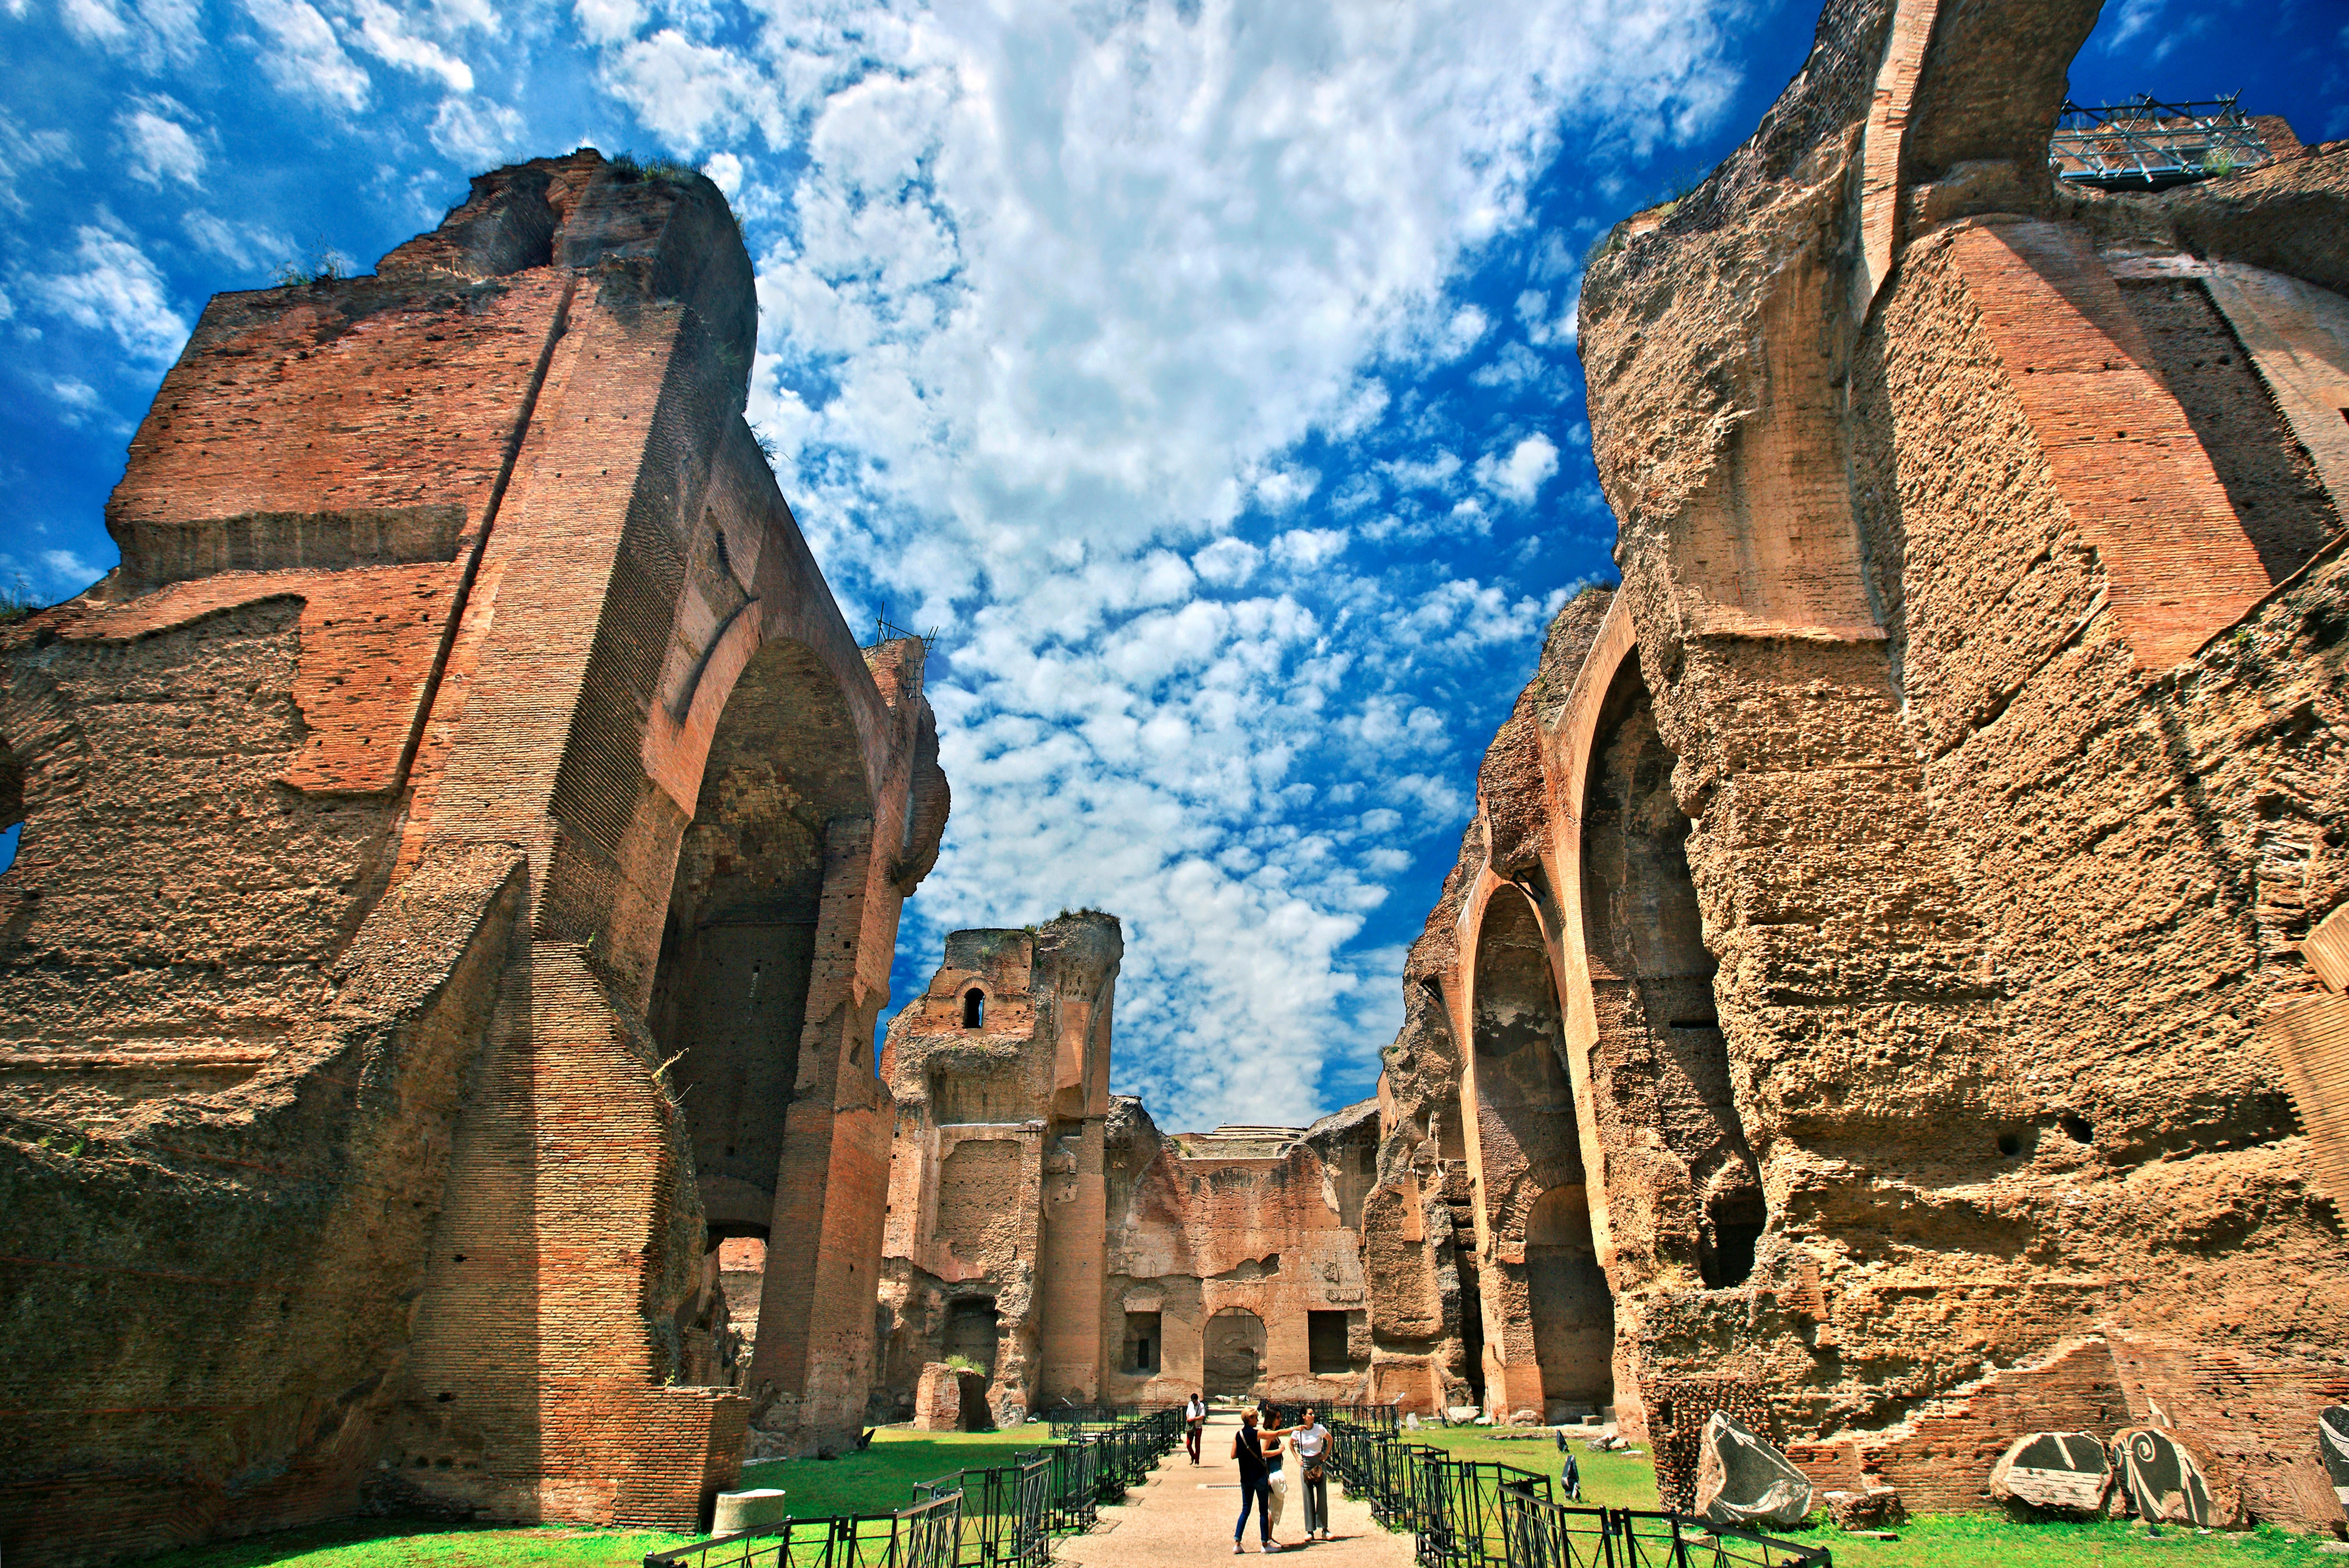 At the Baths of Caracalla (Terme di Caracalla – built between 212 – 216/217 AD), Rome, Italy.